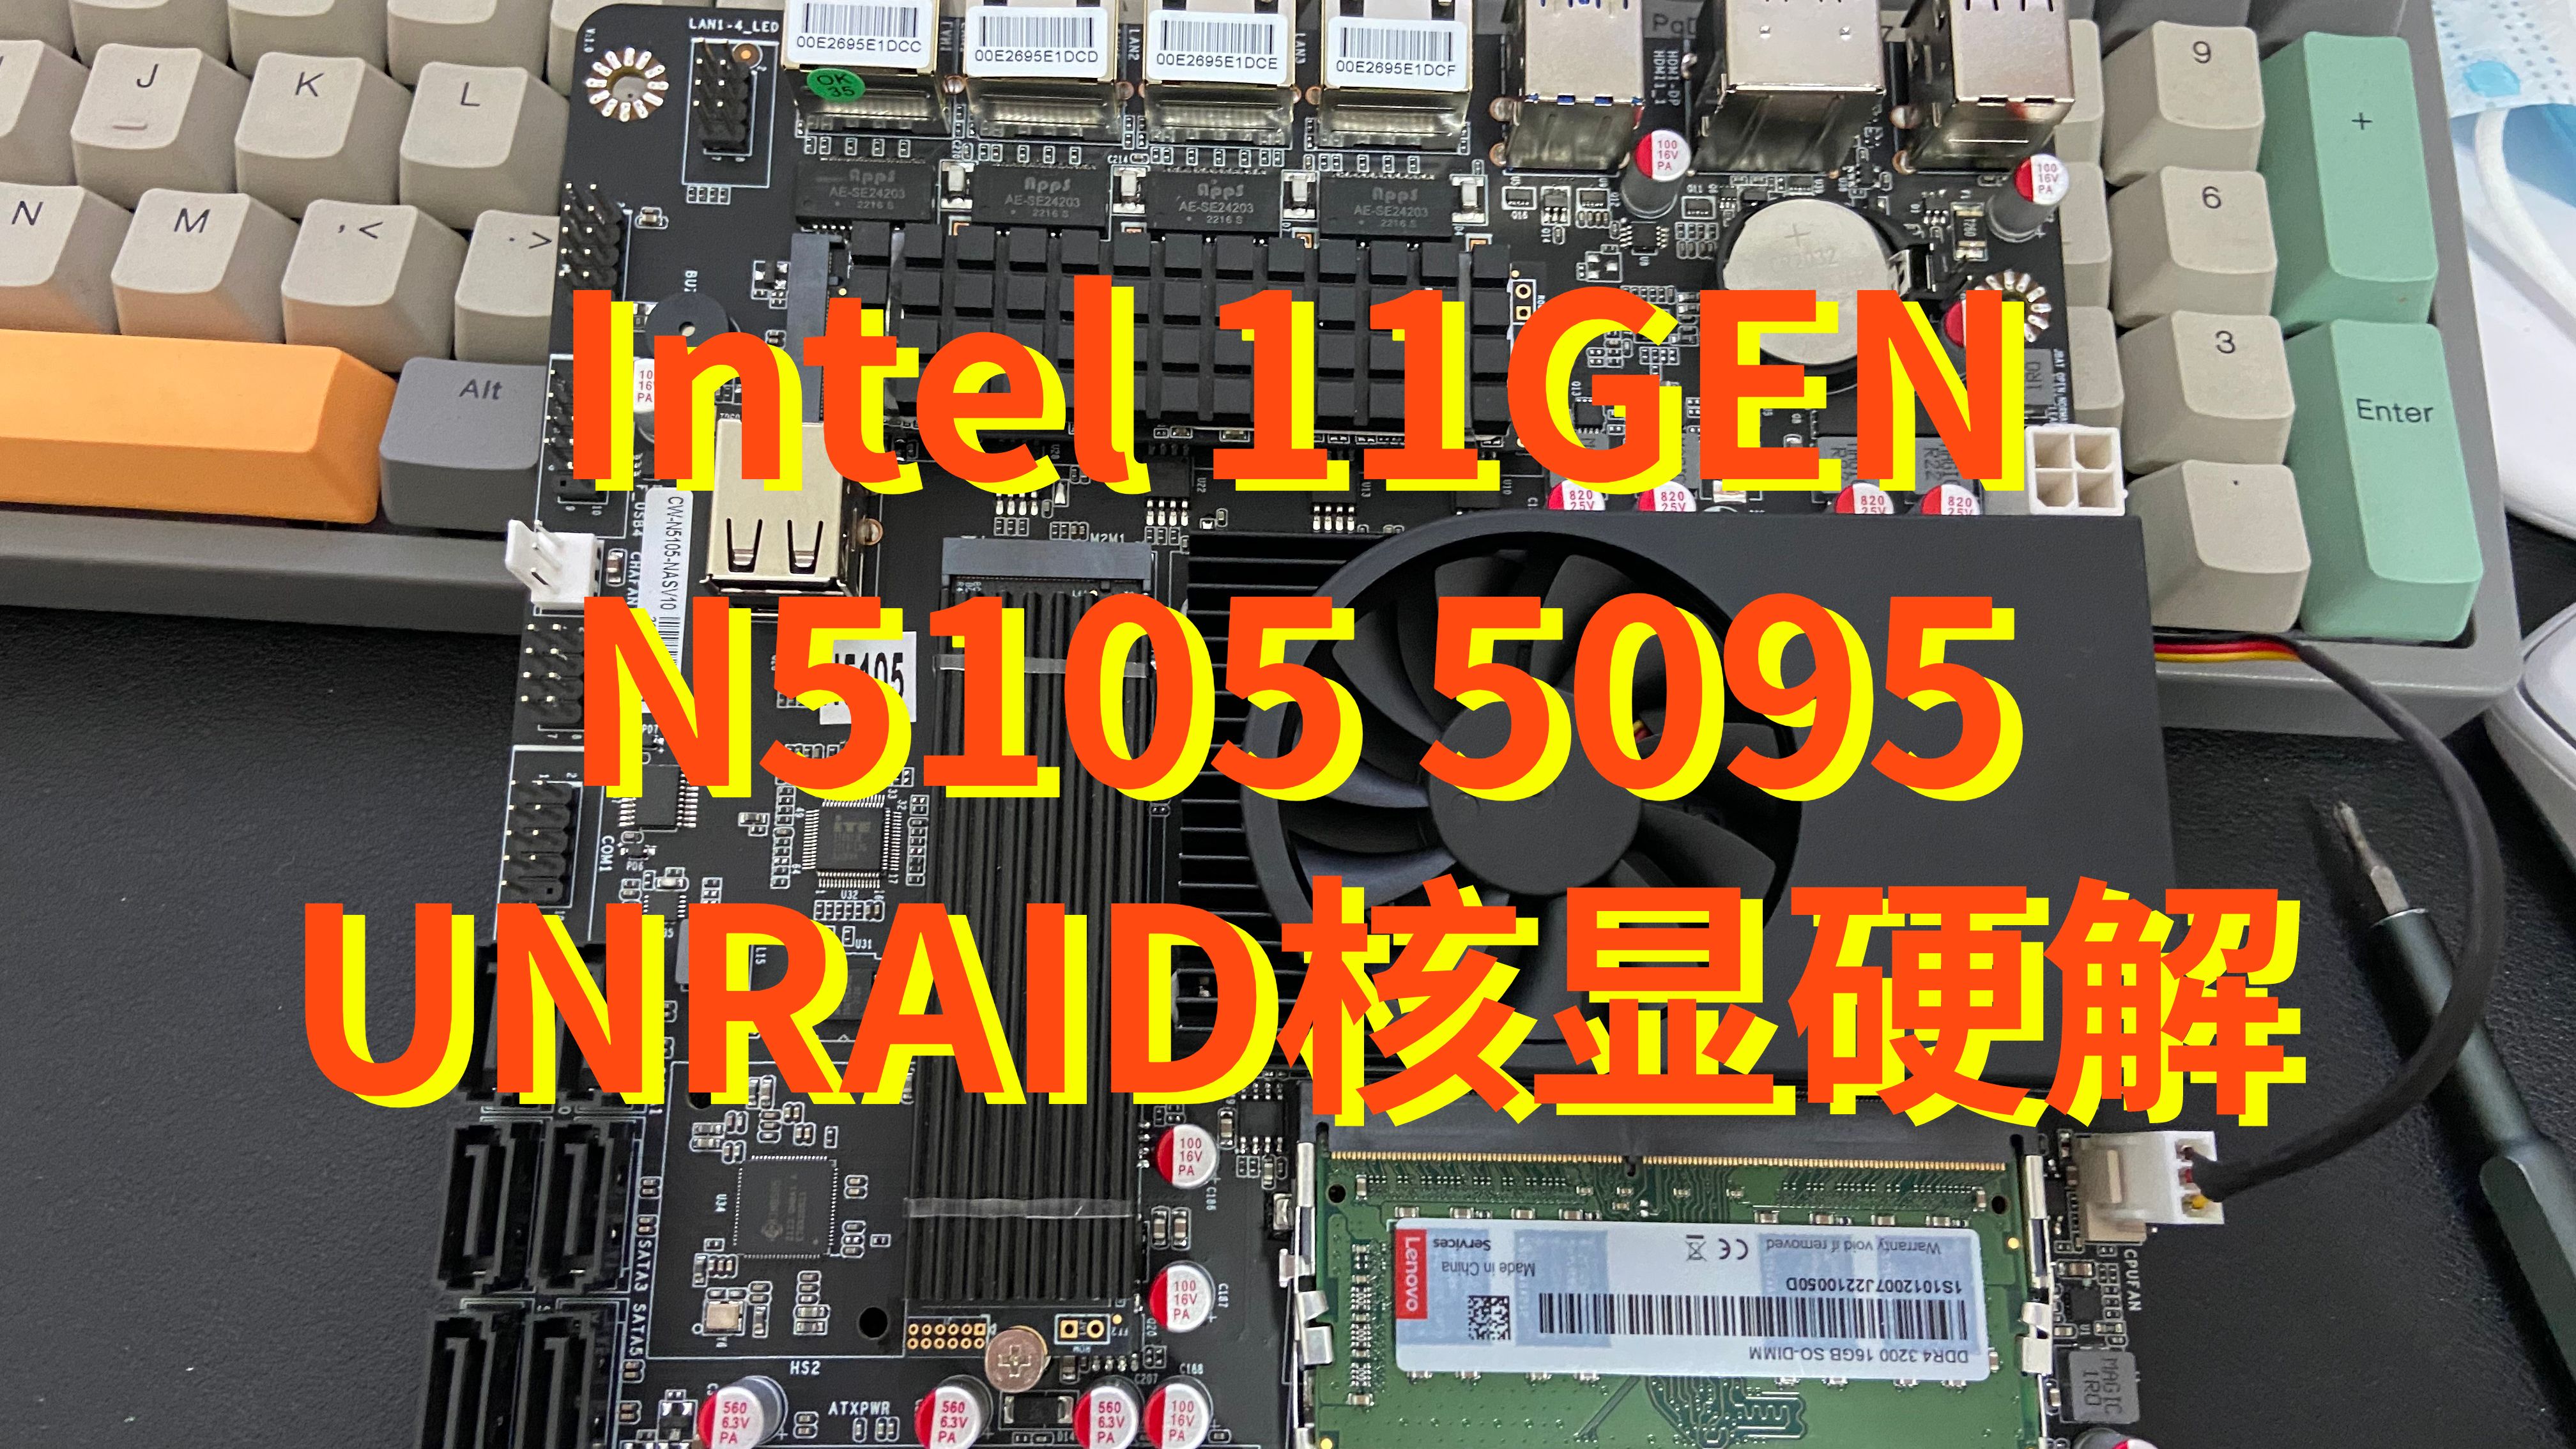 UNRAID Intel 11GEN英特尔11代N5105/5095核显Plex/Emby/Jellyfin硬解QSV